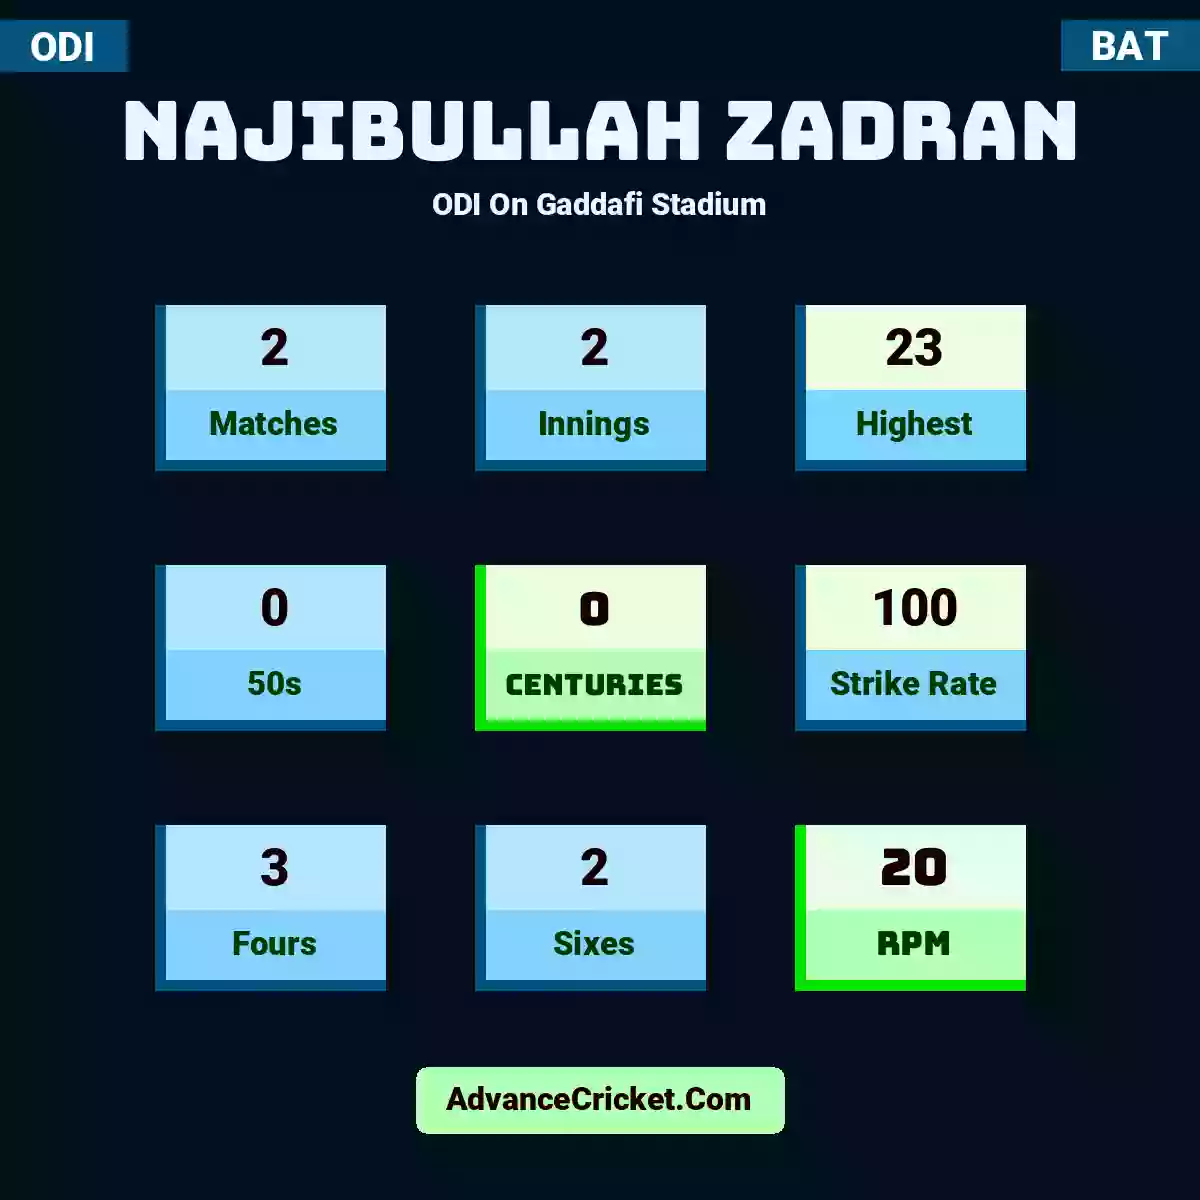 Najibullah Zadran ODI  On Gaddafi Stadium, Najibullah Zadran played 2 matches, scored 23 runs as highest, 0 half-centuries, and 0 centuries, with a strike rate of 100. N.Zadran hit 3 fours and 2 sixes, with an RPM of 20.